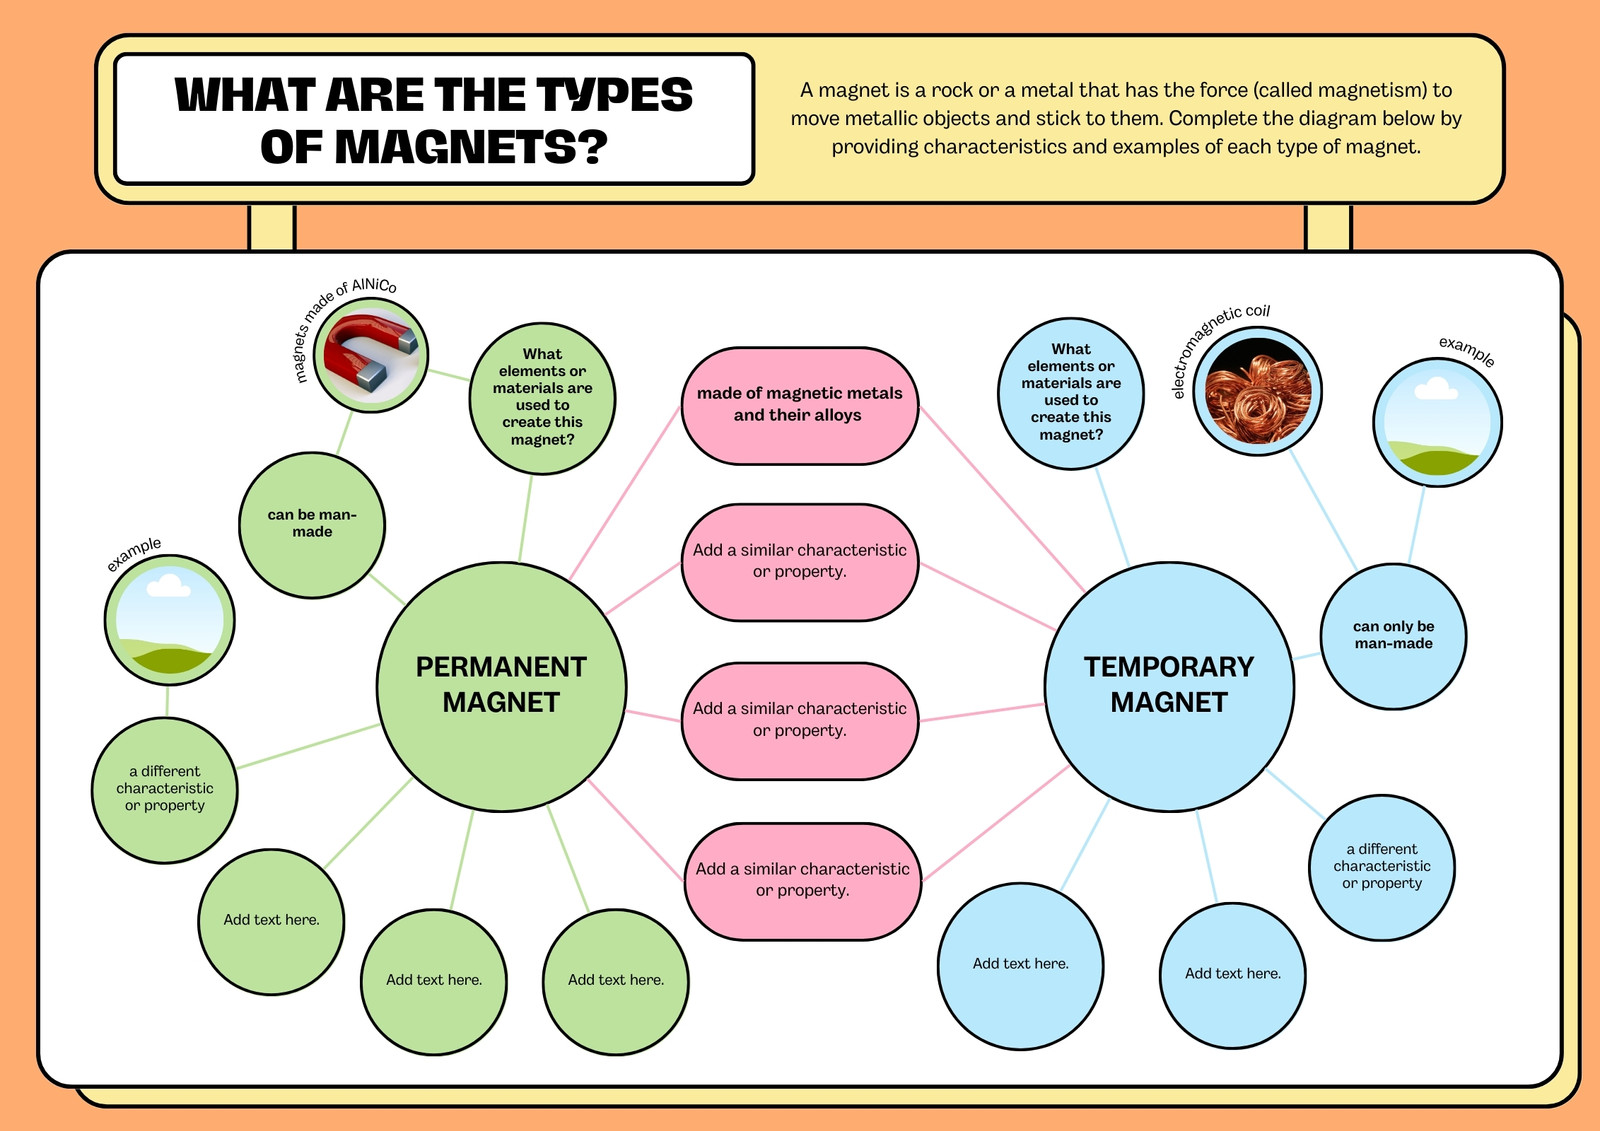 Types of Scientists Graphic Organizer